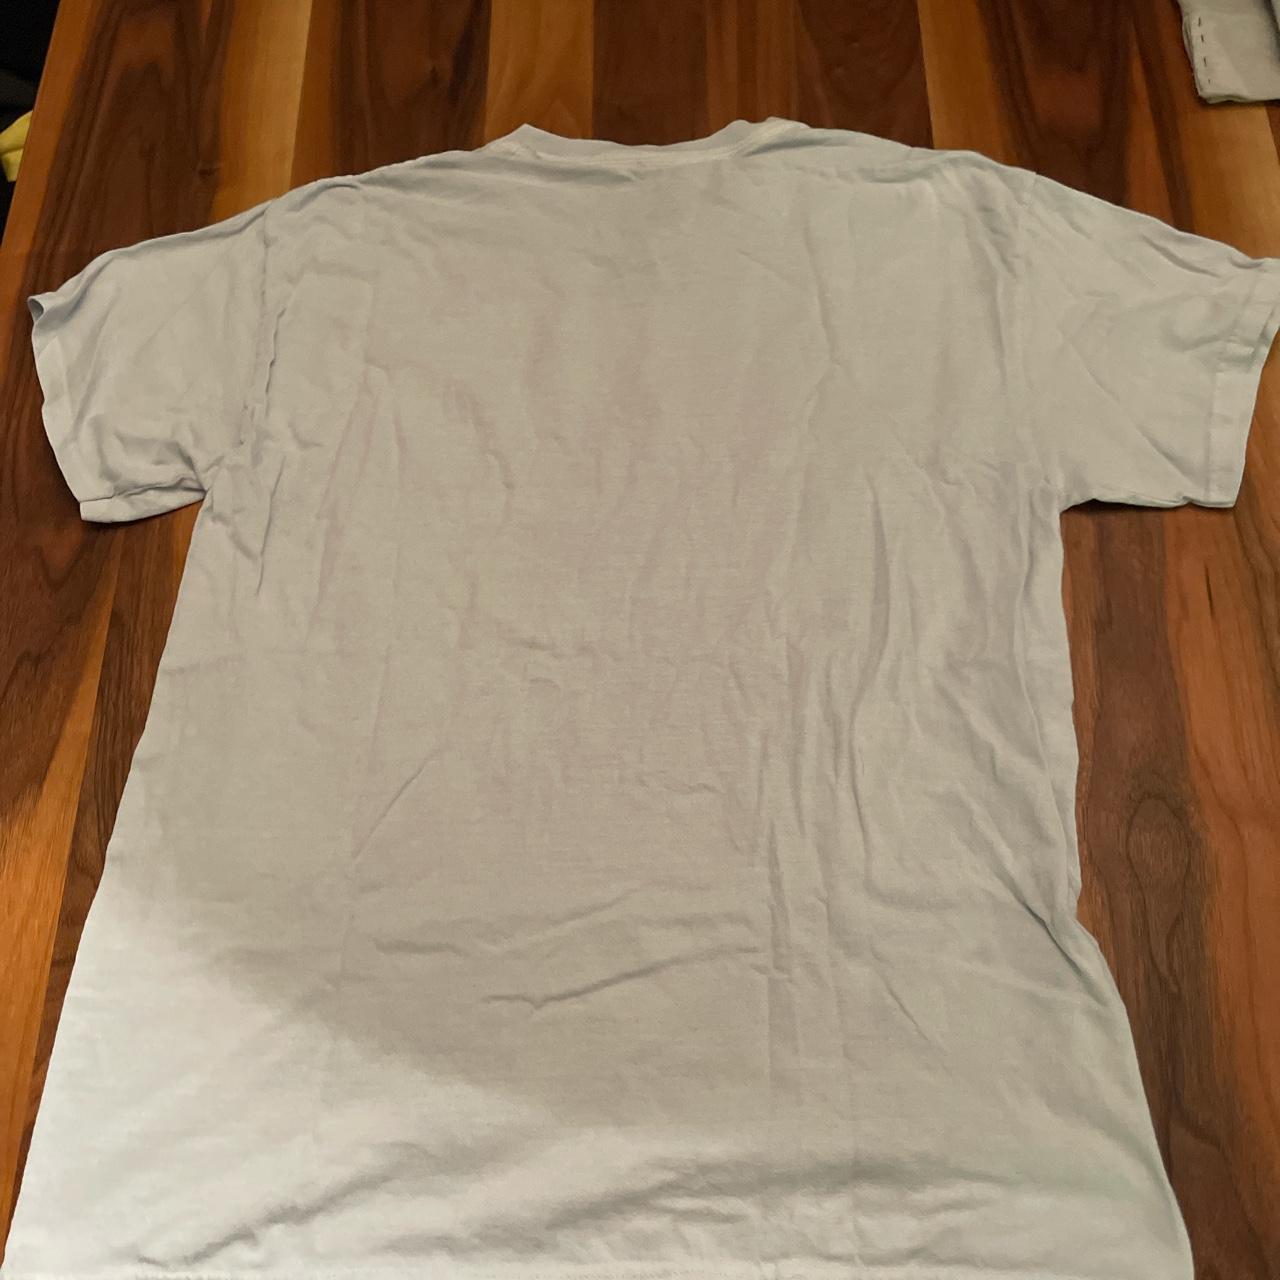 Led zeppelin t shirt size M #led zeppelin - Depop